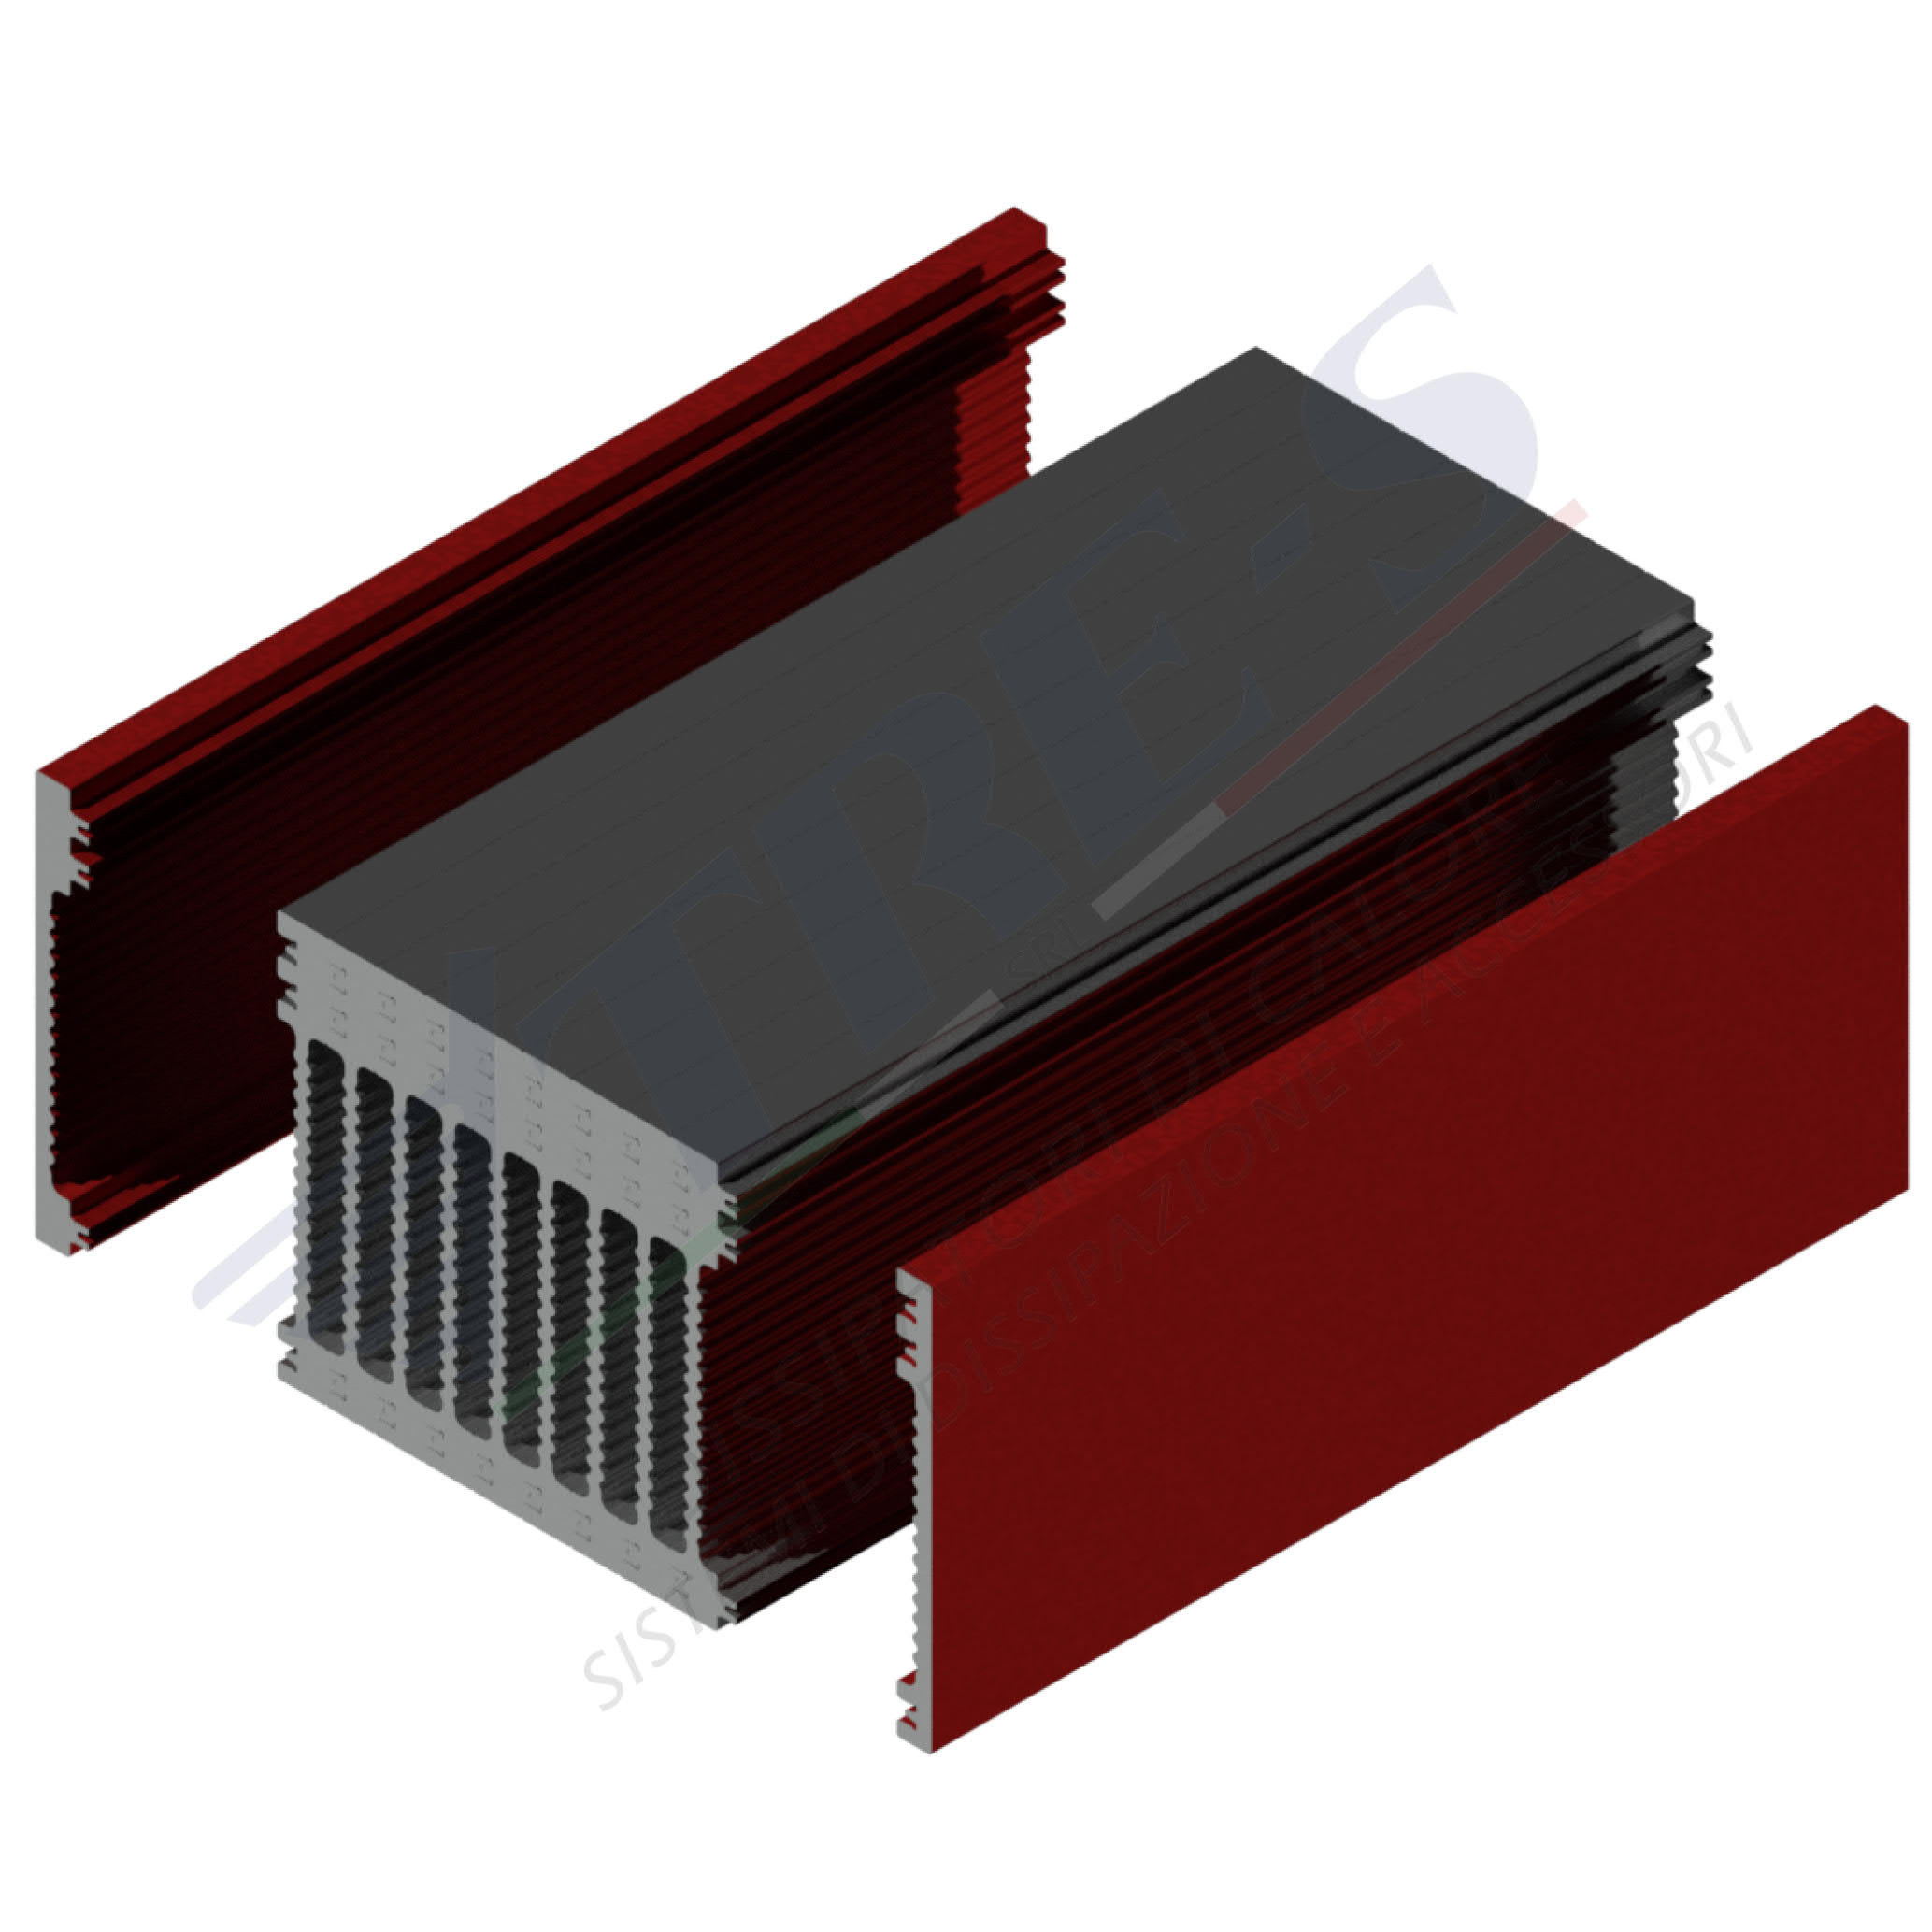 PRI1041 AB - Embedded heat sinks